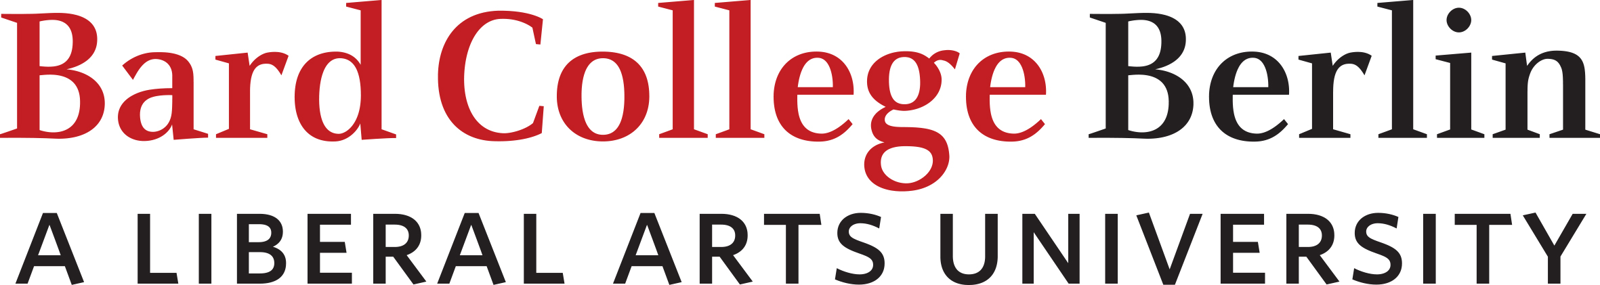 Professorship of Visual Art - Bard College Berlin, A Liberal Arts University gGmbH - Logo